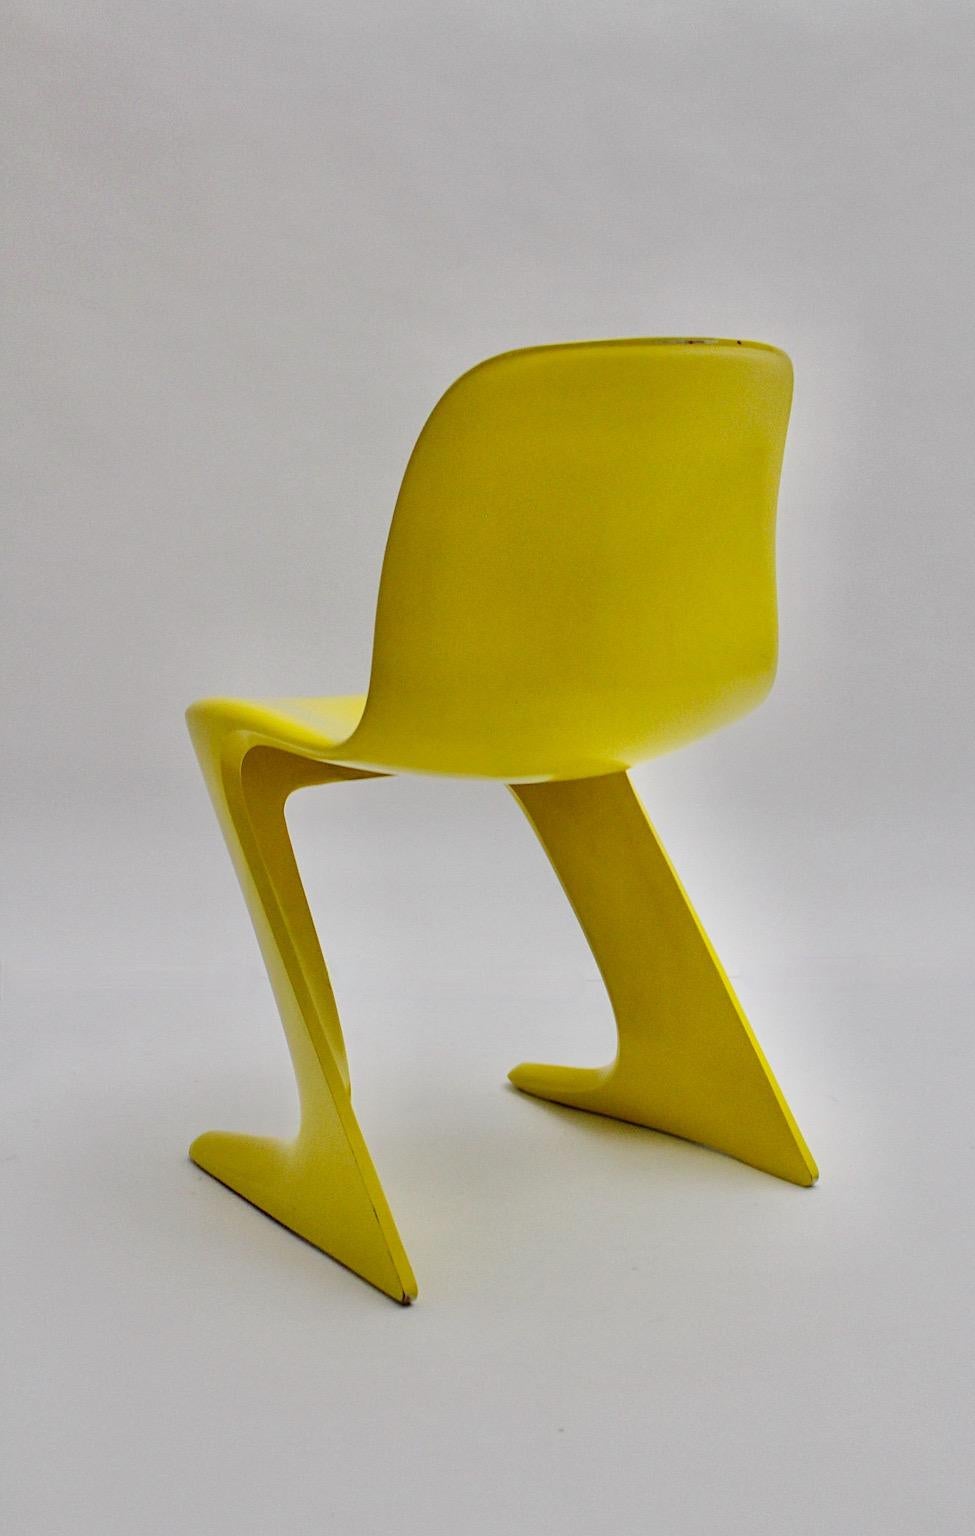 Space Age Vintage Gelber Kunststoffstuhl Kangaroo-Stuhl Ernst Moeckl 1960er Jahre Deutschland im Angebot 3